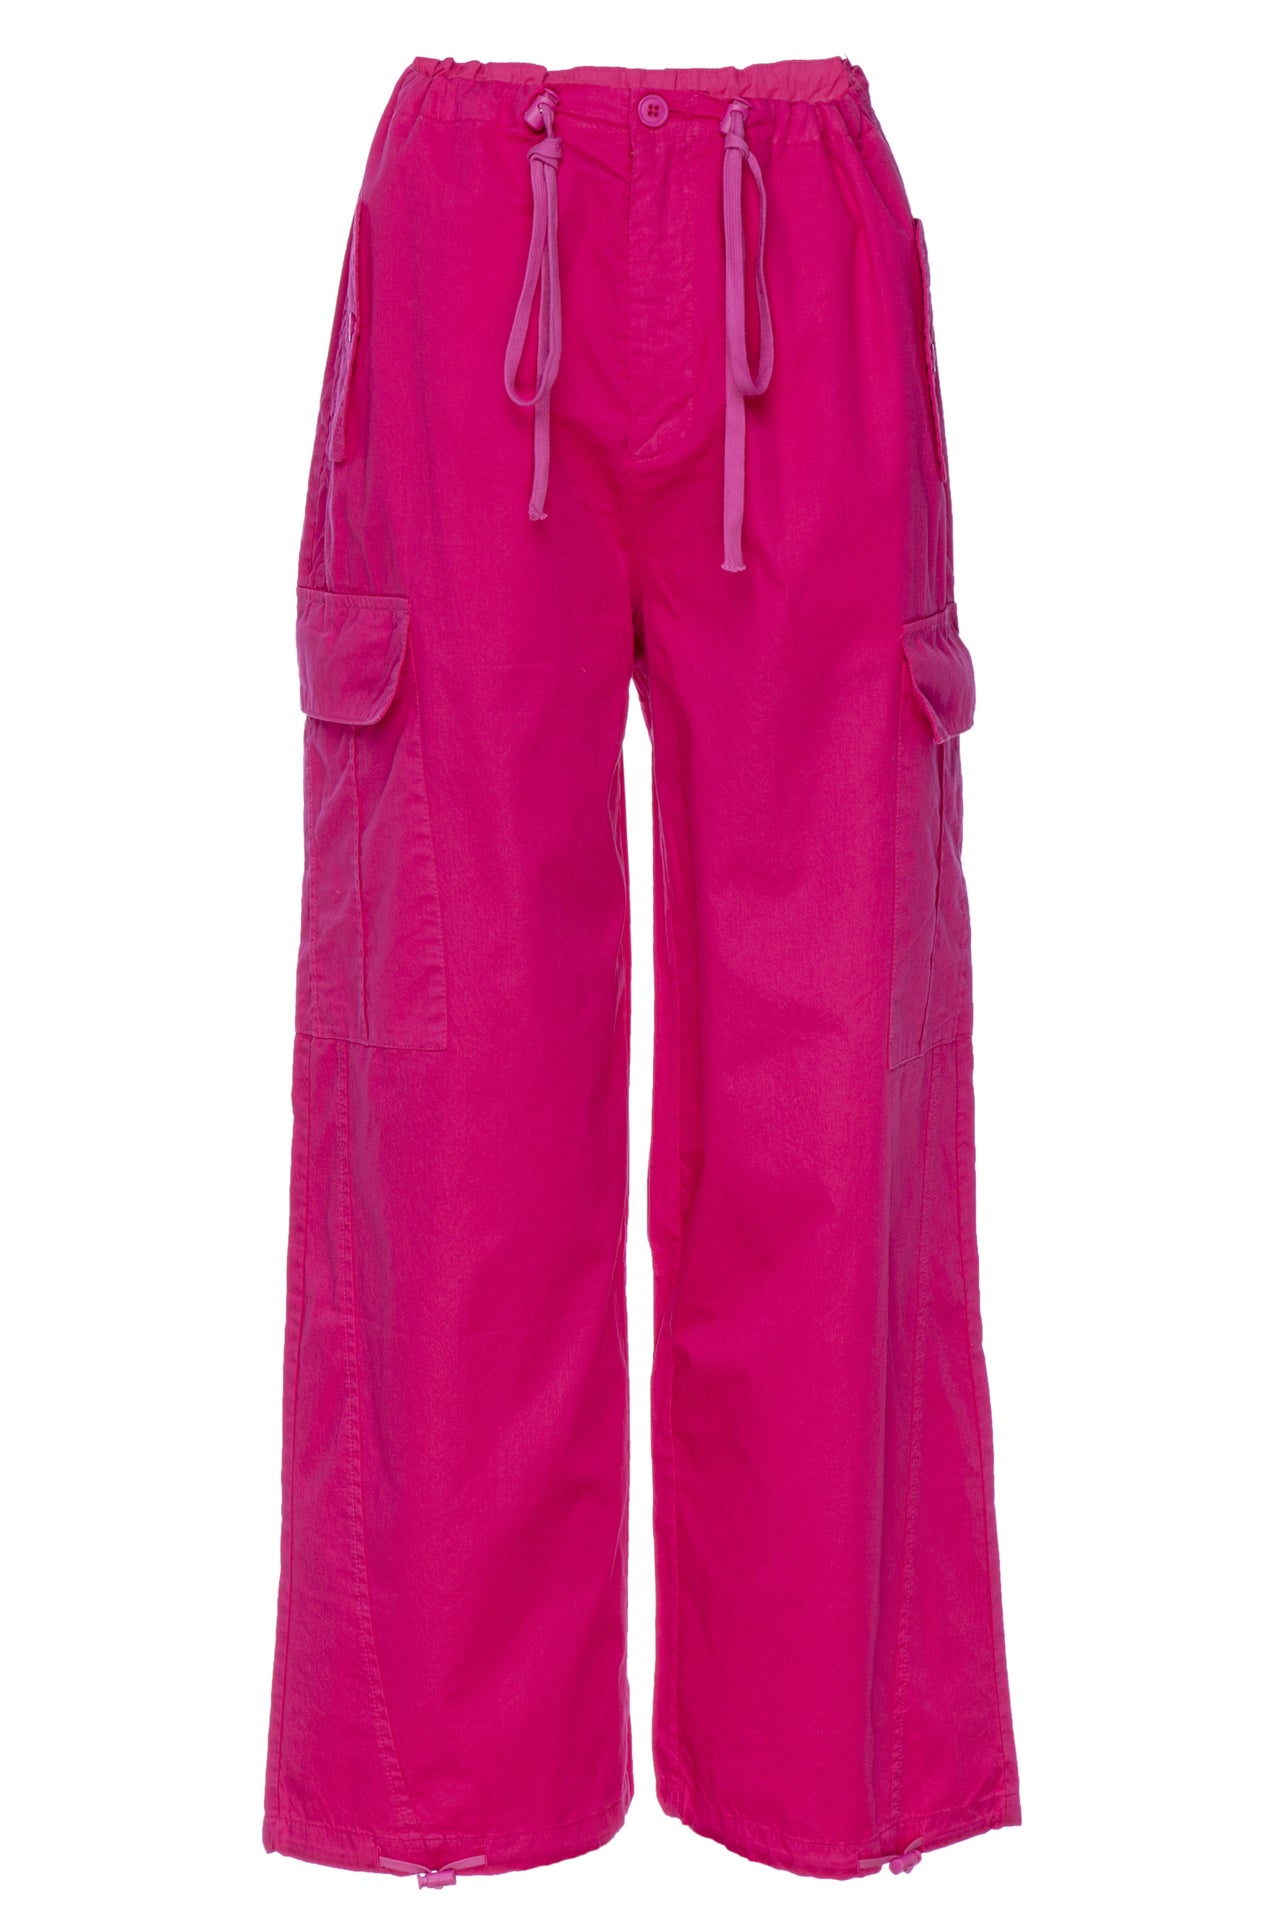 Parachute trousers - Light pink - Ladies